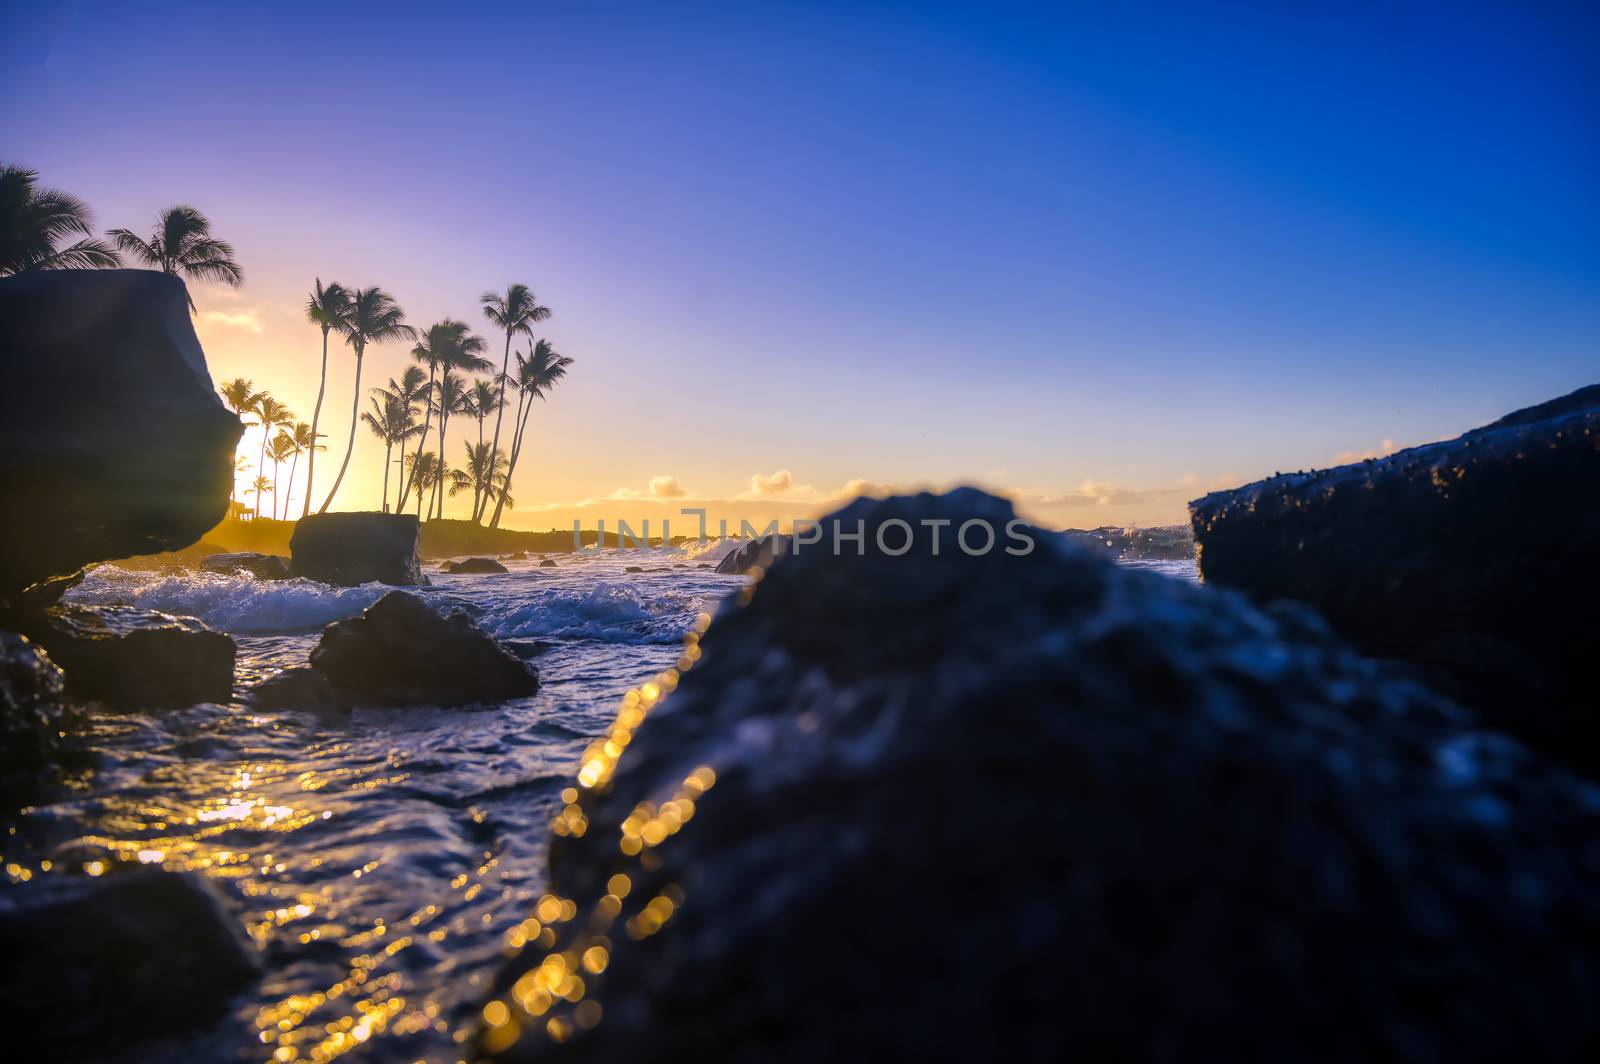 Sunrise over the coast of Kauai, Hawaii by jbyard22